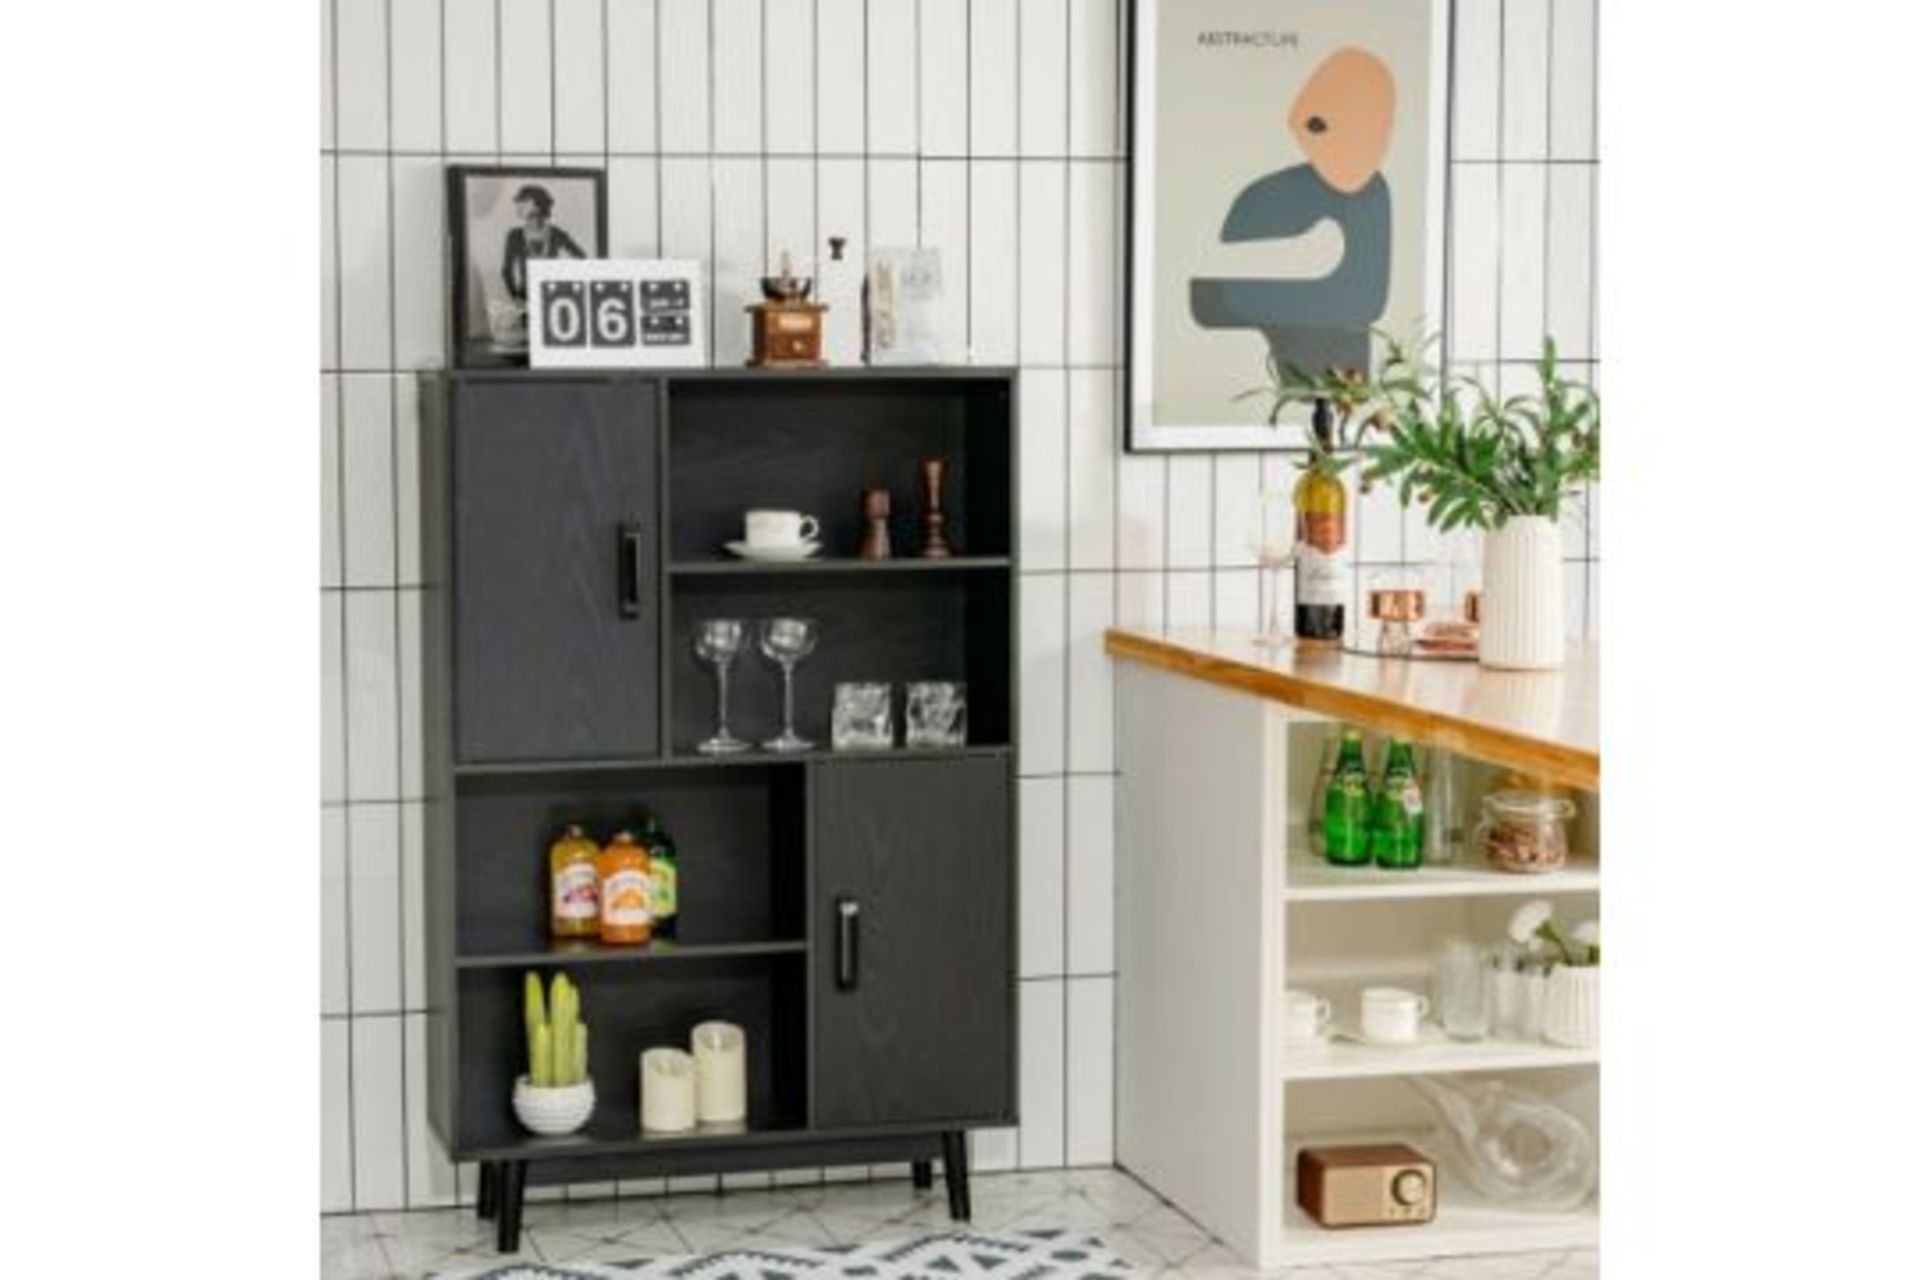 Sideboard Storage Cabinet With Door Shelf. - R14.8. This 4-tier storage cabinet organizes your books